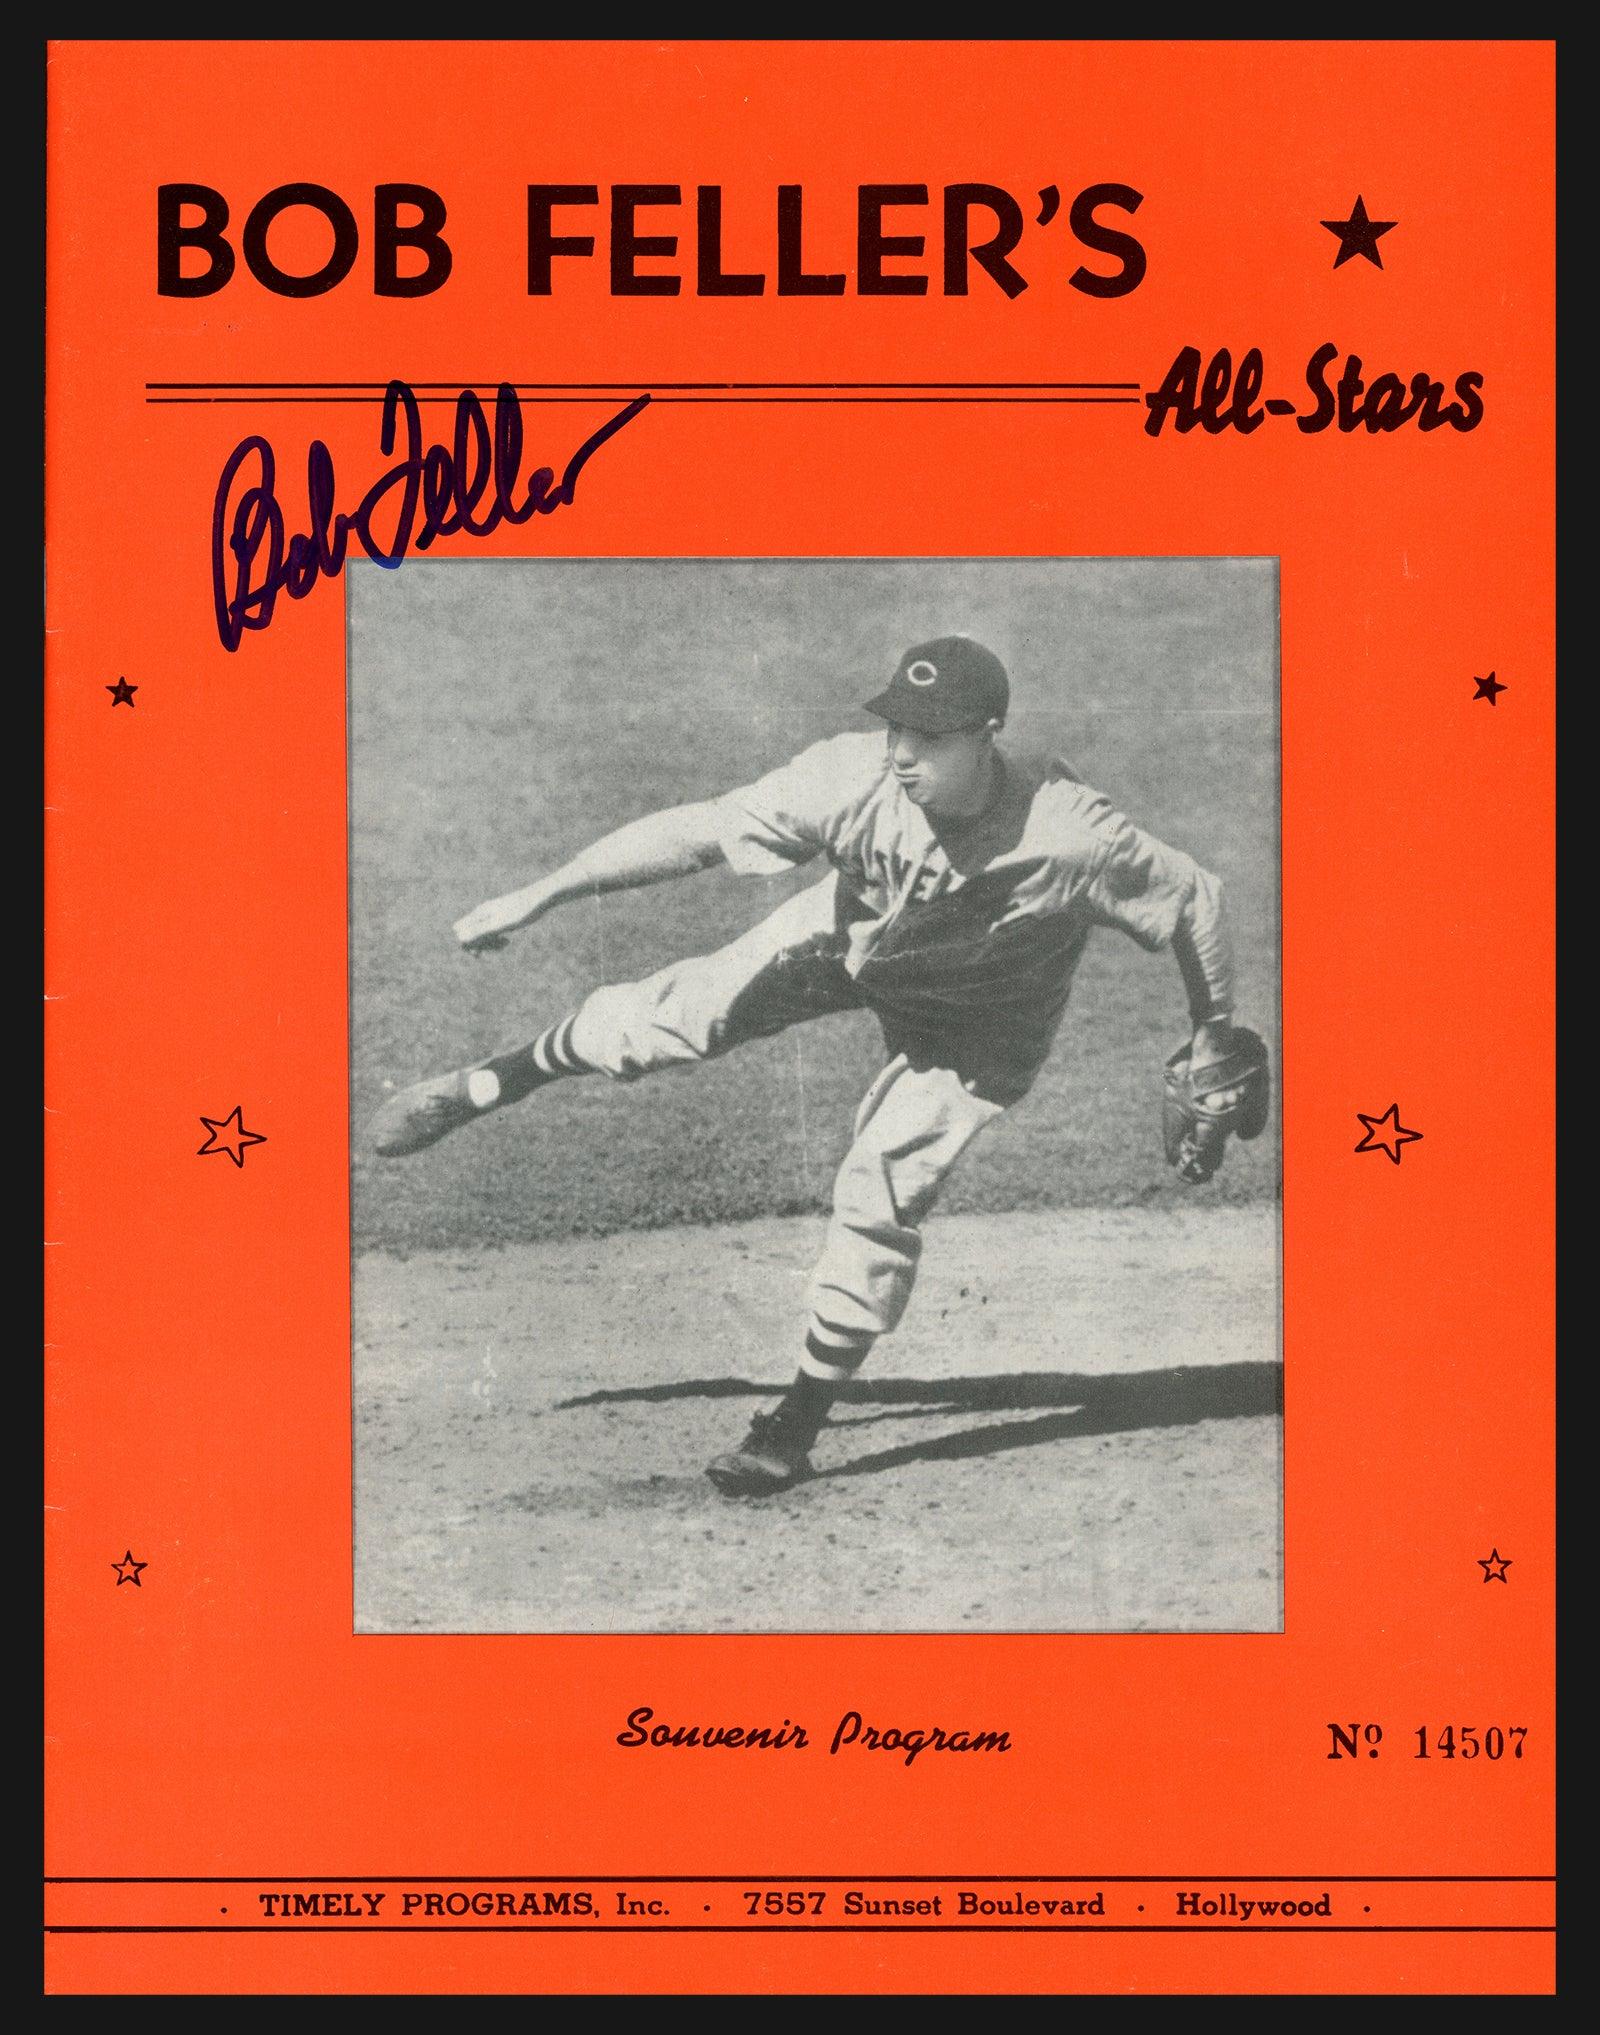 Bob Feller Framed Signed Cleveland Indians Jersey Beckett Autographed